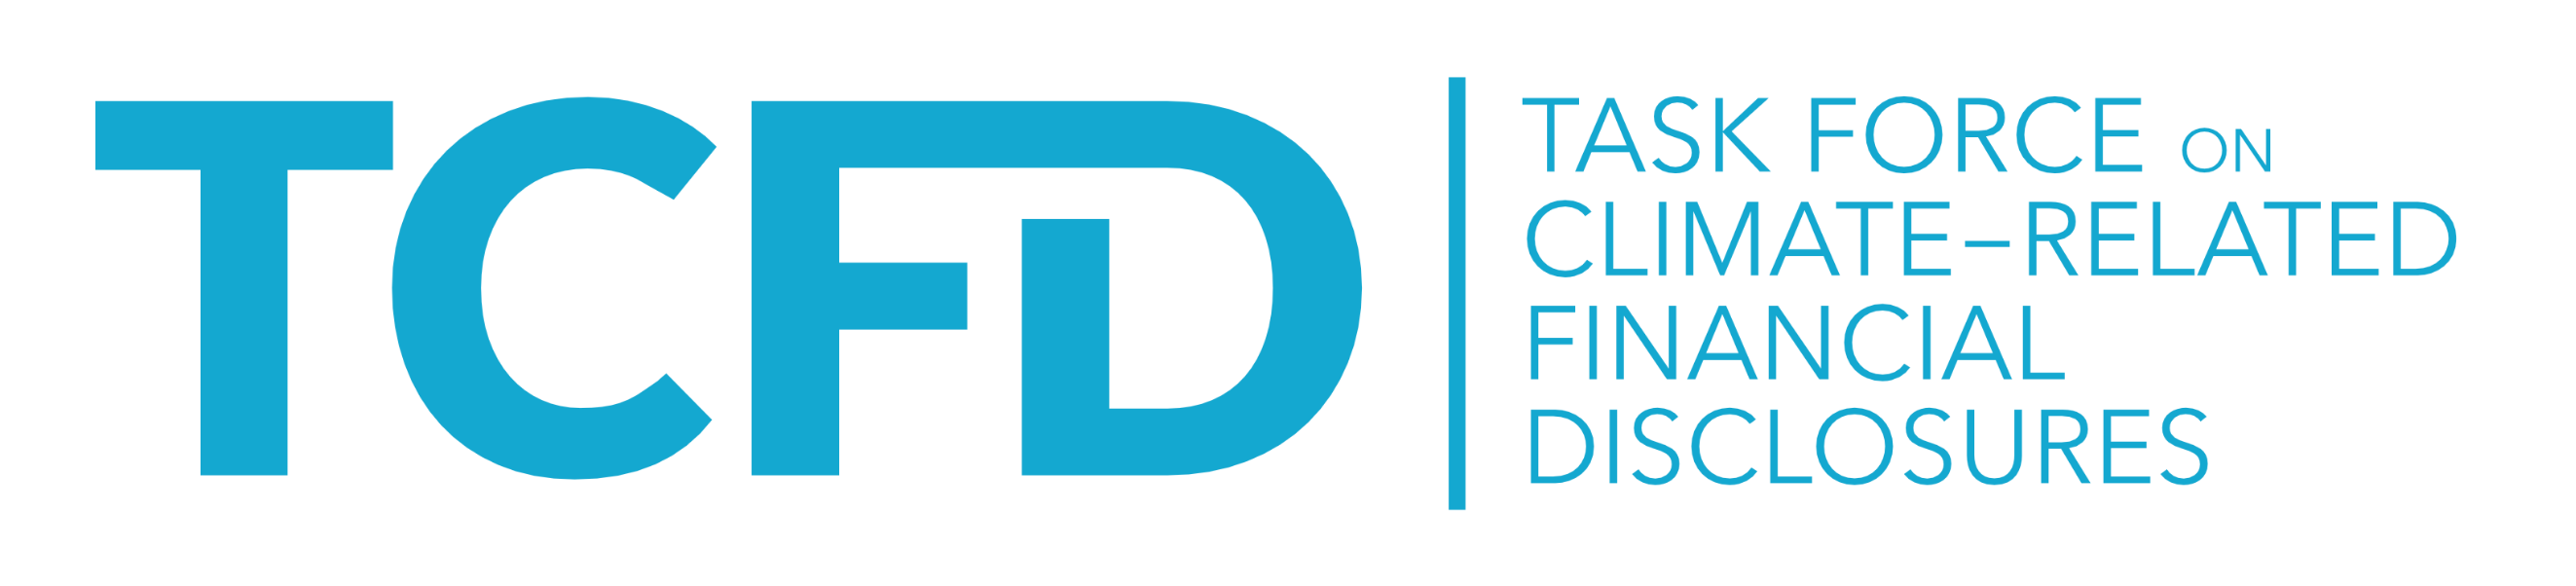 131-TCFD_logo.png